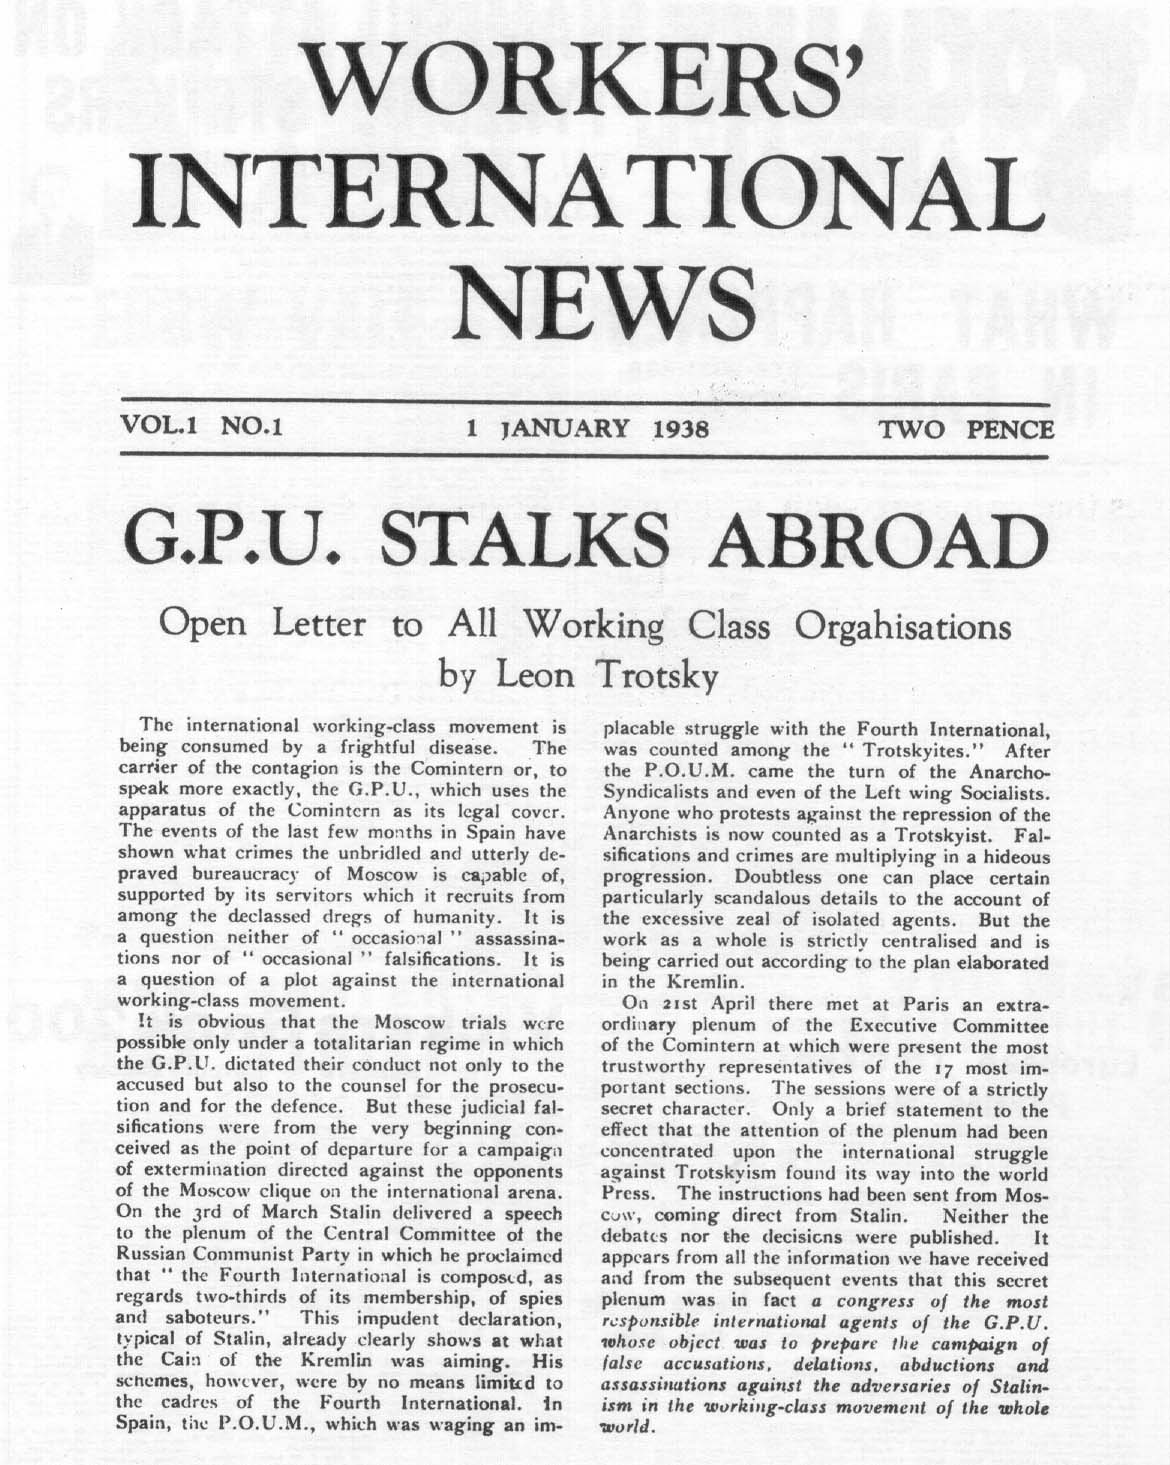 Workers' International News, January 1938